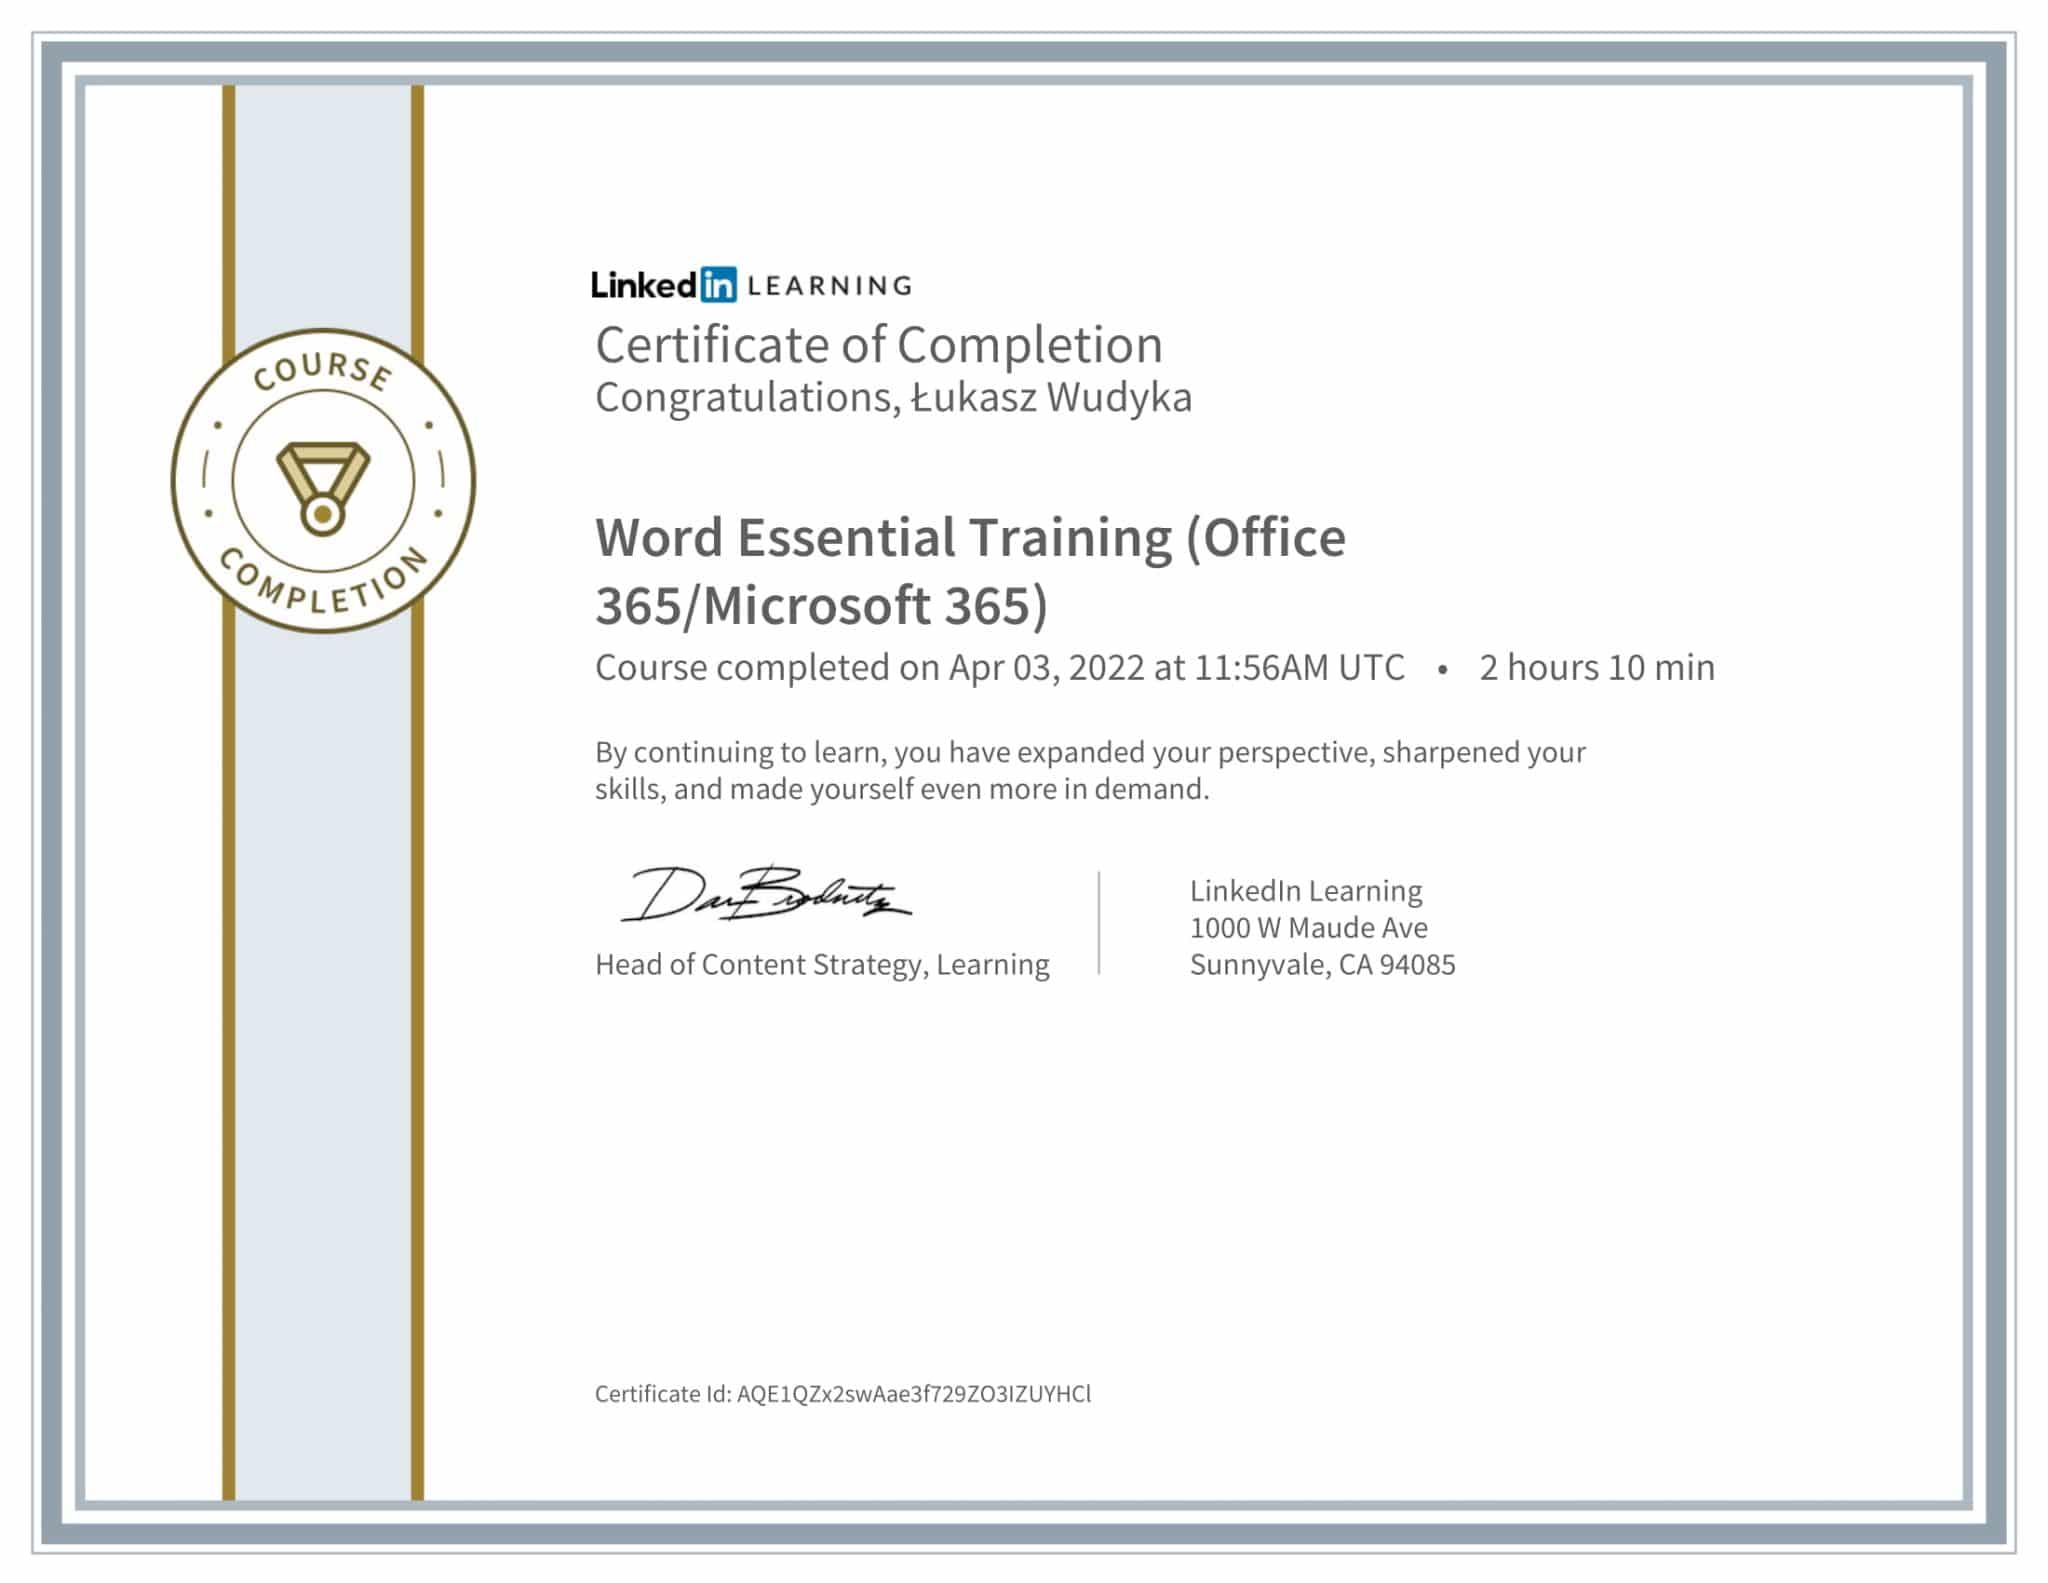 Łukasz Wudyka certyfikat LinkedIn Windows Server 2012: Installation and Configuration